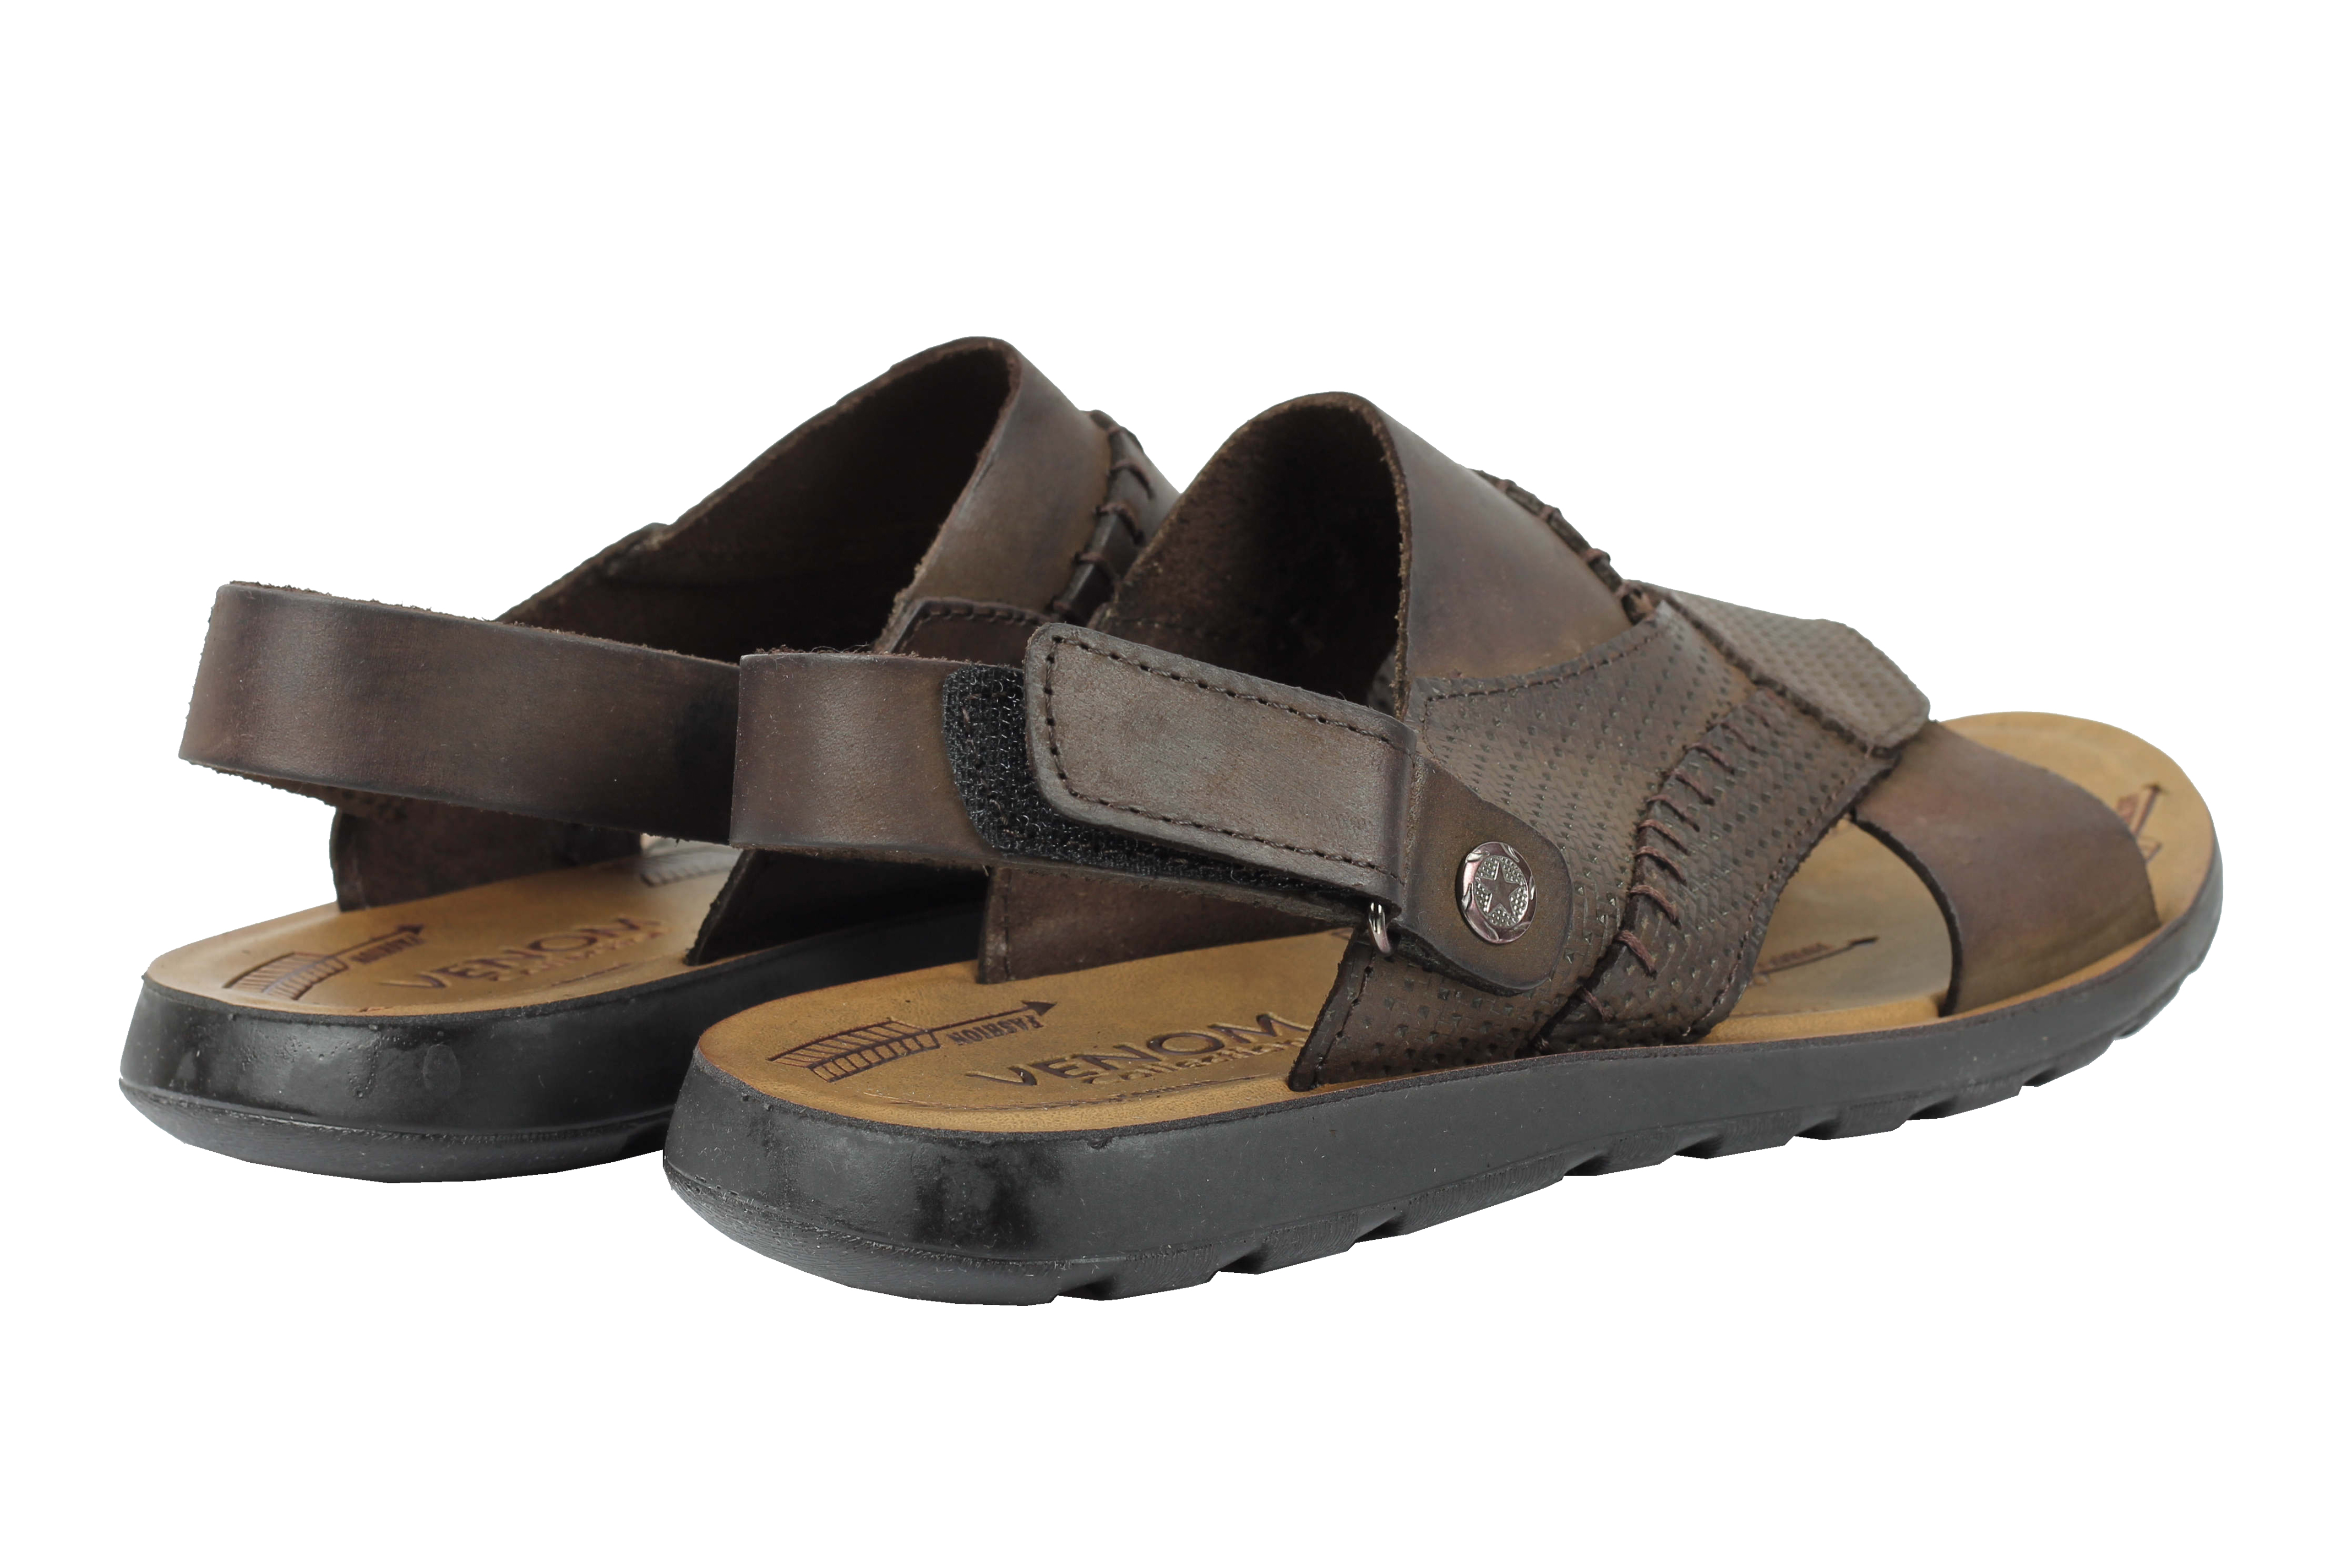 Mens Brown Leather Sandals Walking Summer Beach Shoe Size UK 6 7 8 9 10 11 12 13 